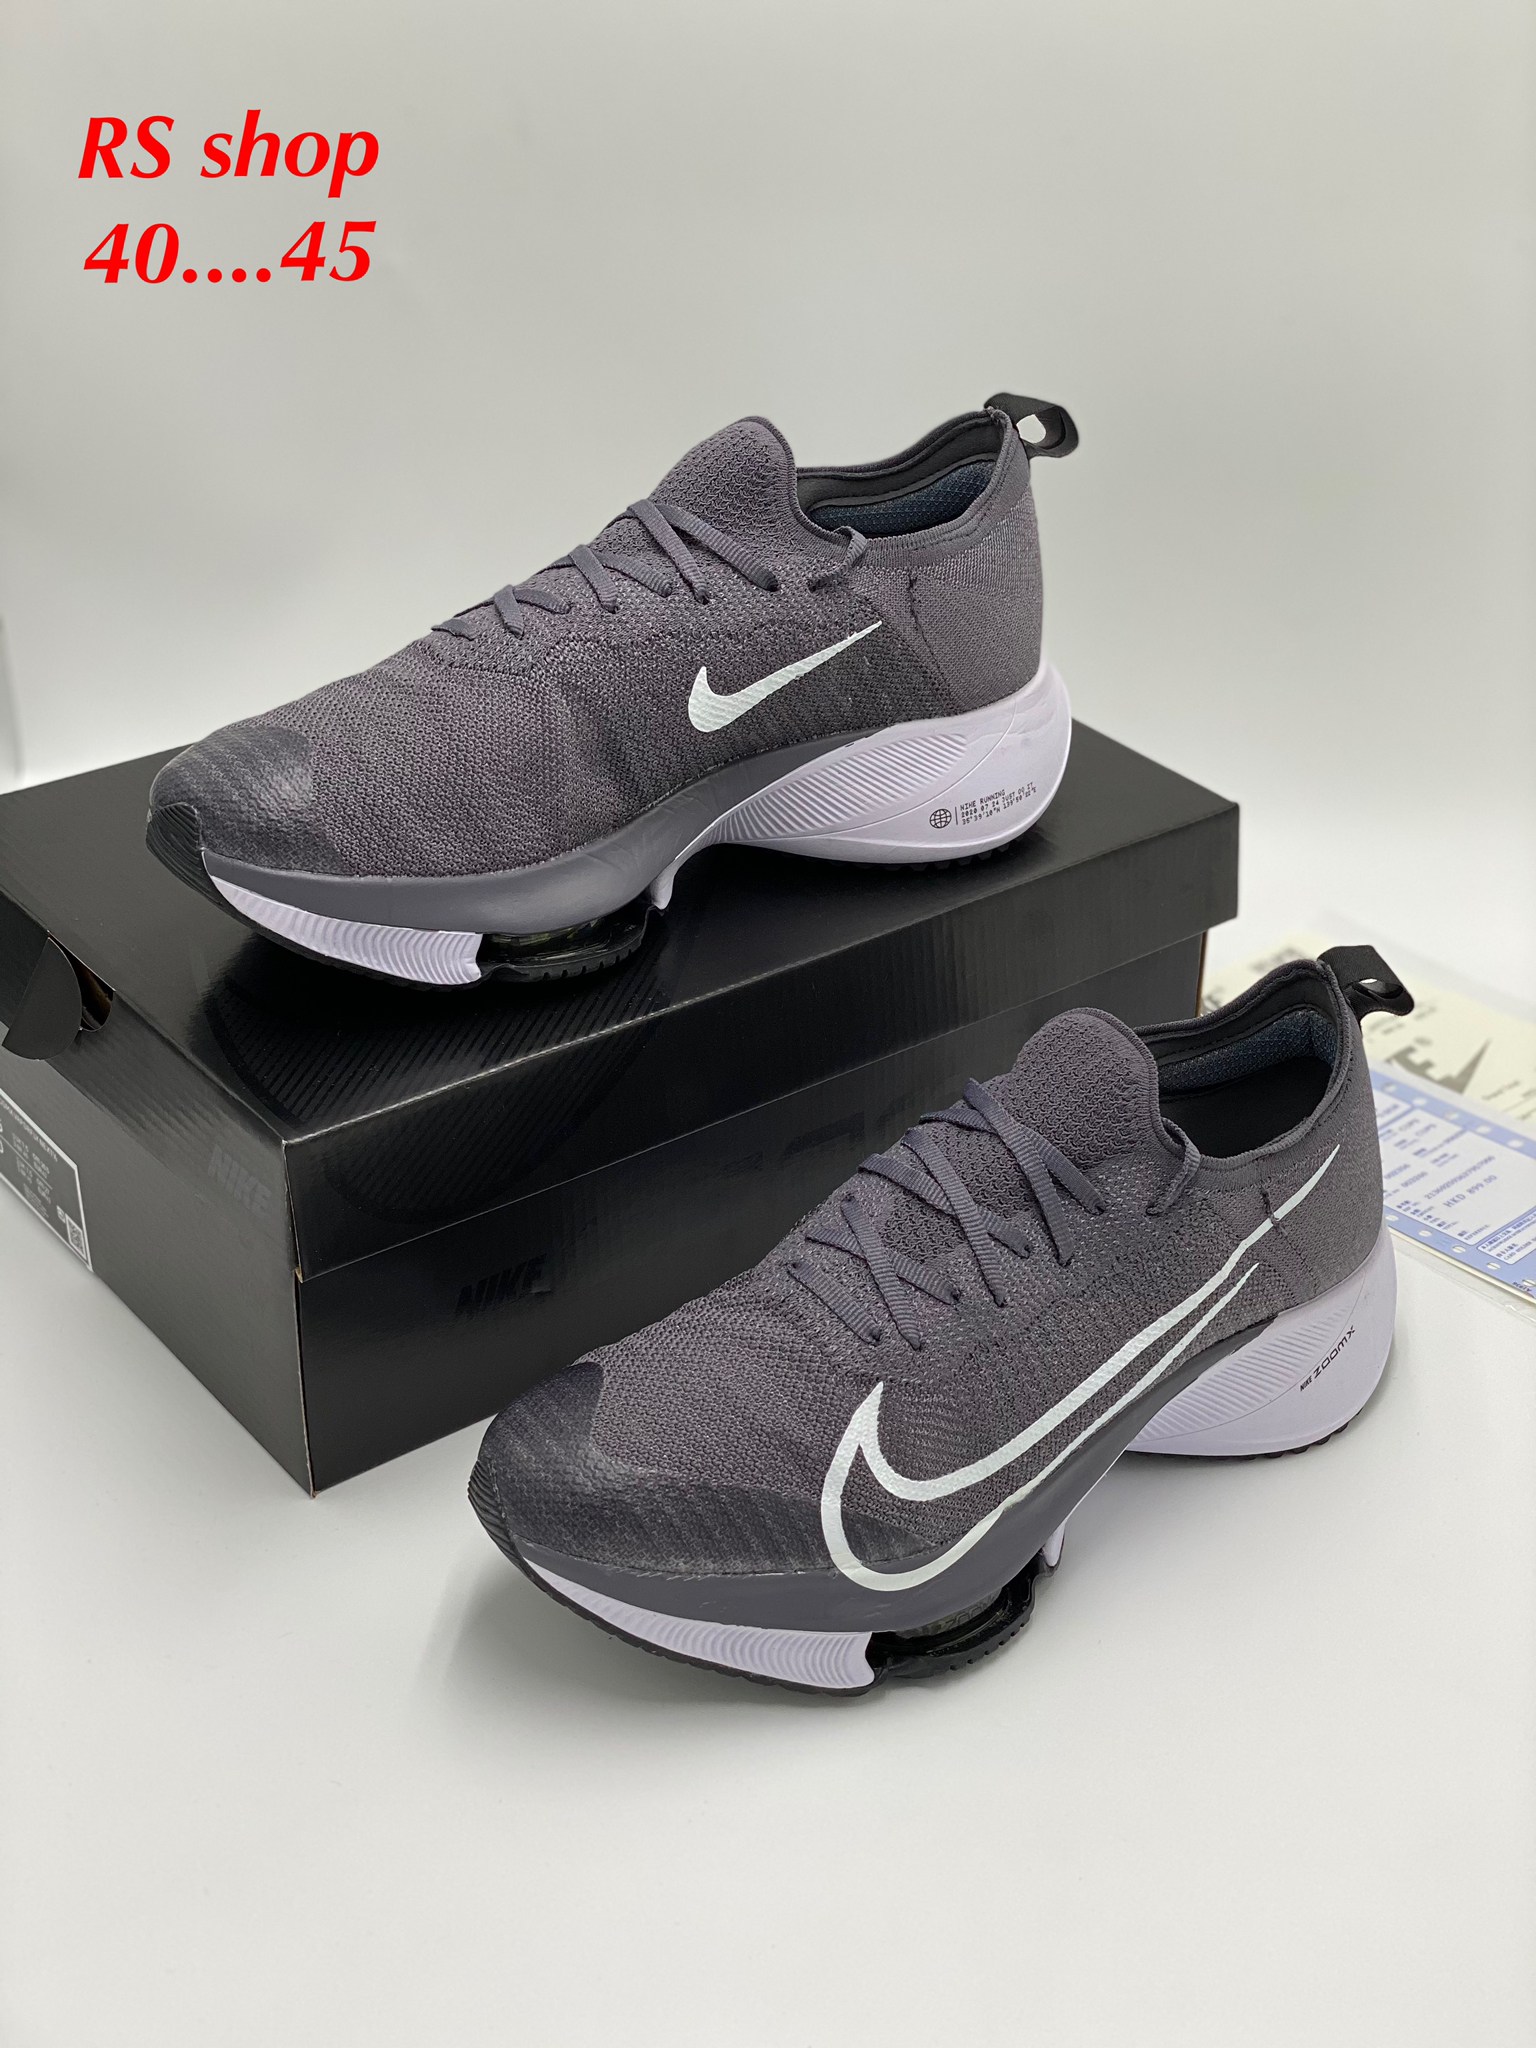 【Sport.Home】รองเท้าวิ่งNikee Air Zoom Winflo - gray (Full Box) อุปกรณ์ครบเซ็ต สินค้าตรงปก สินค้าพร้อมส่ง